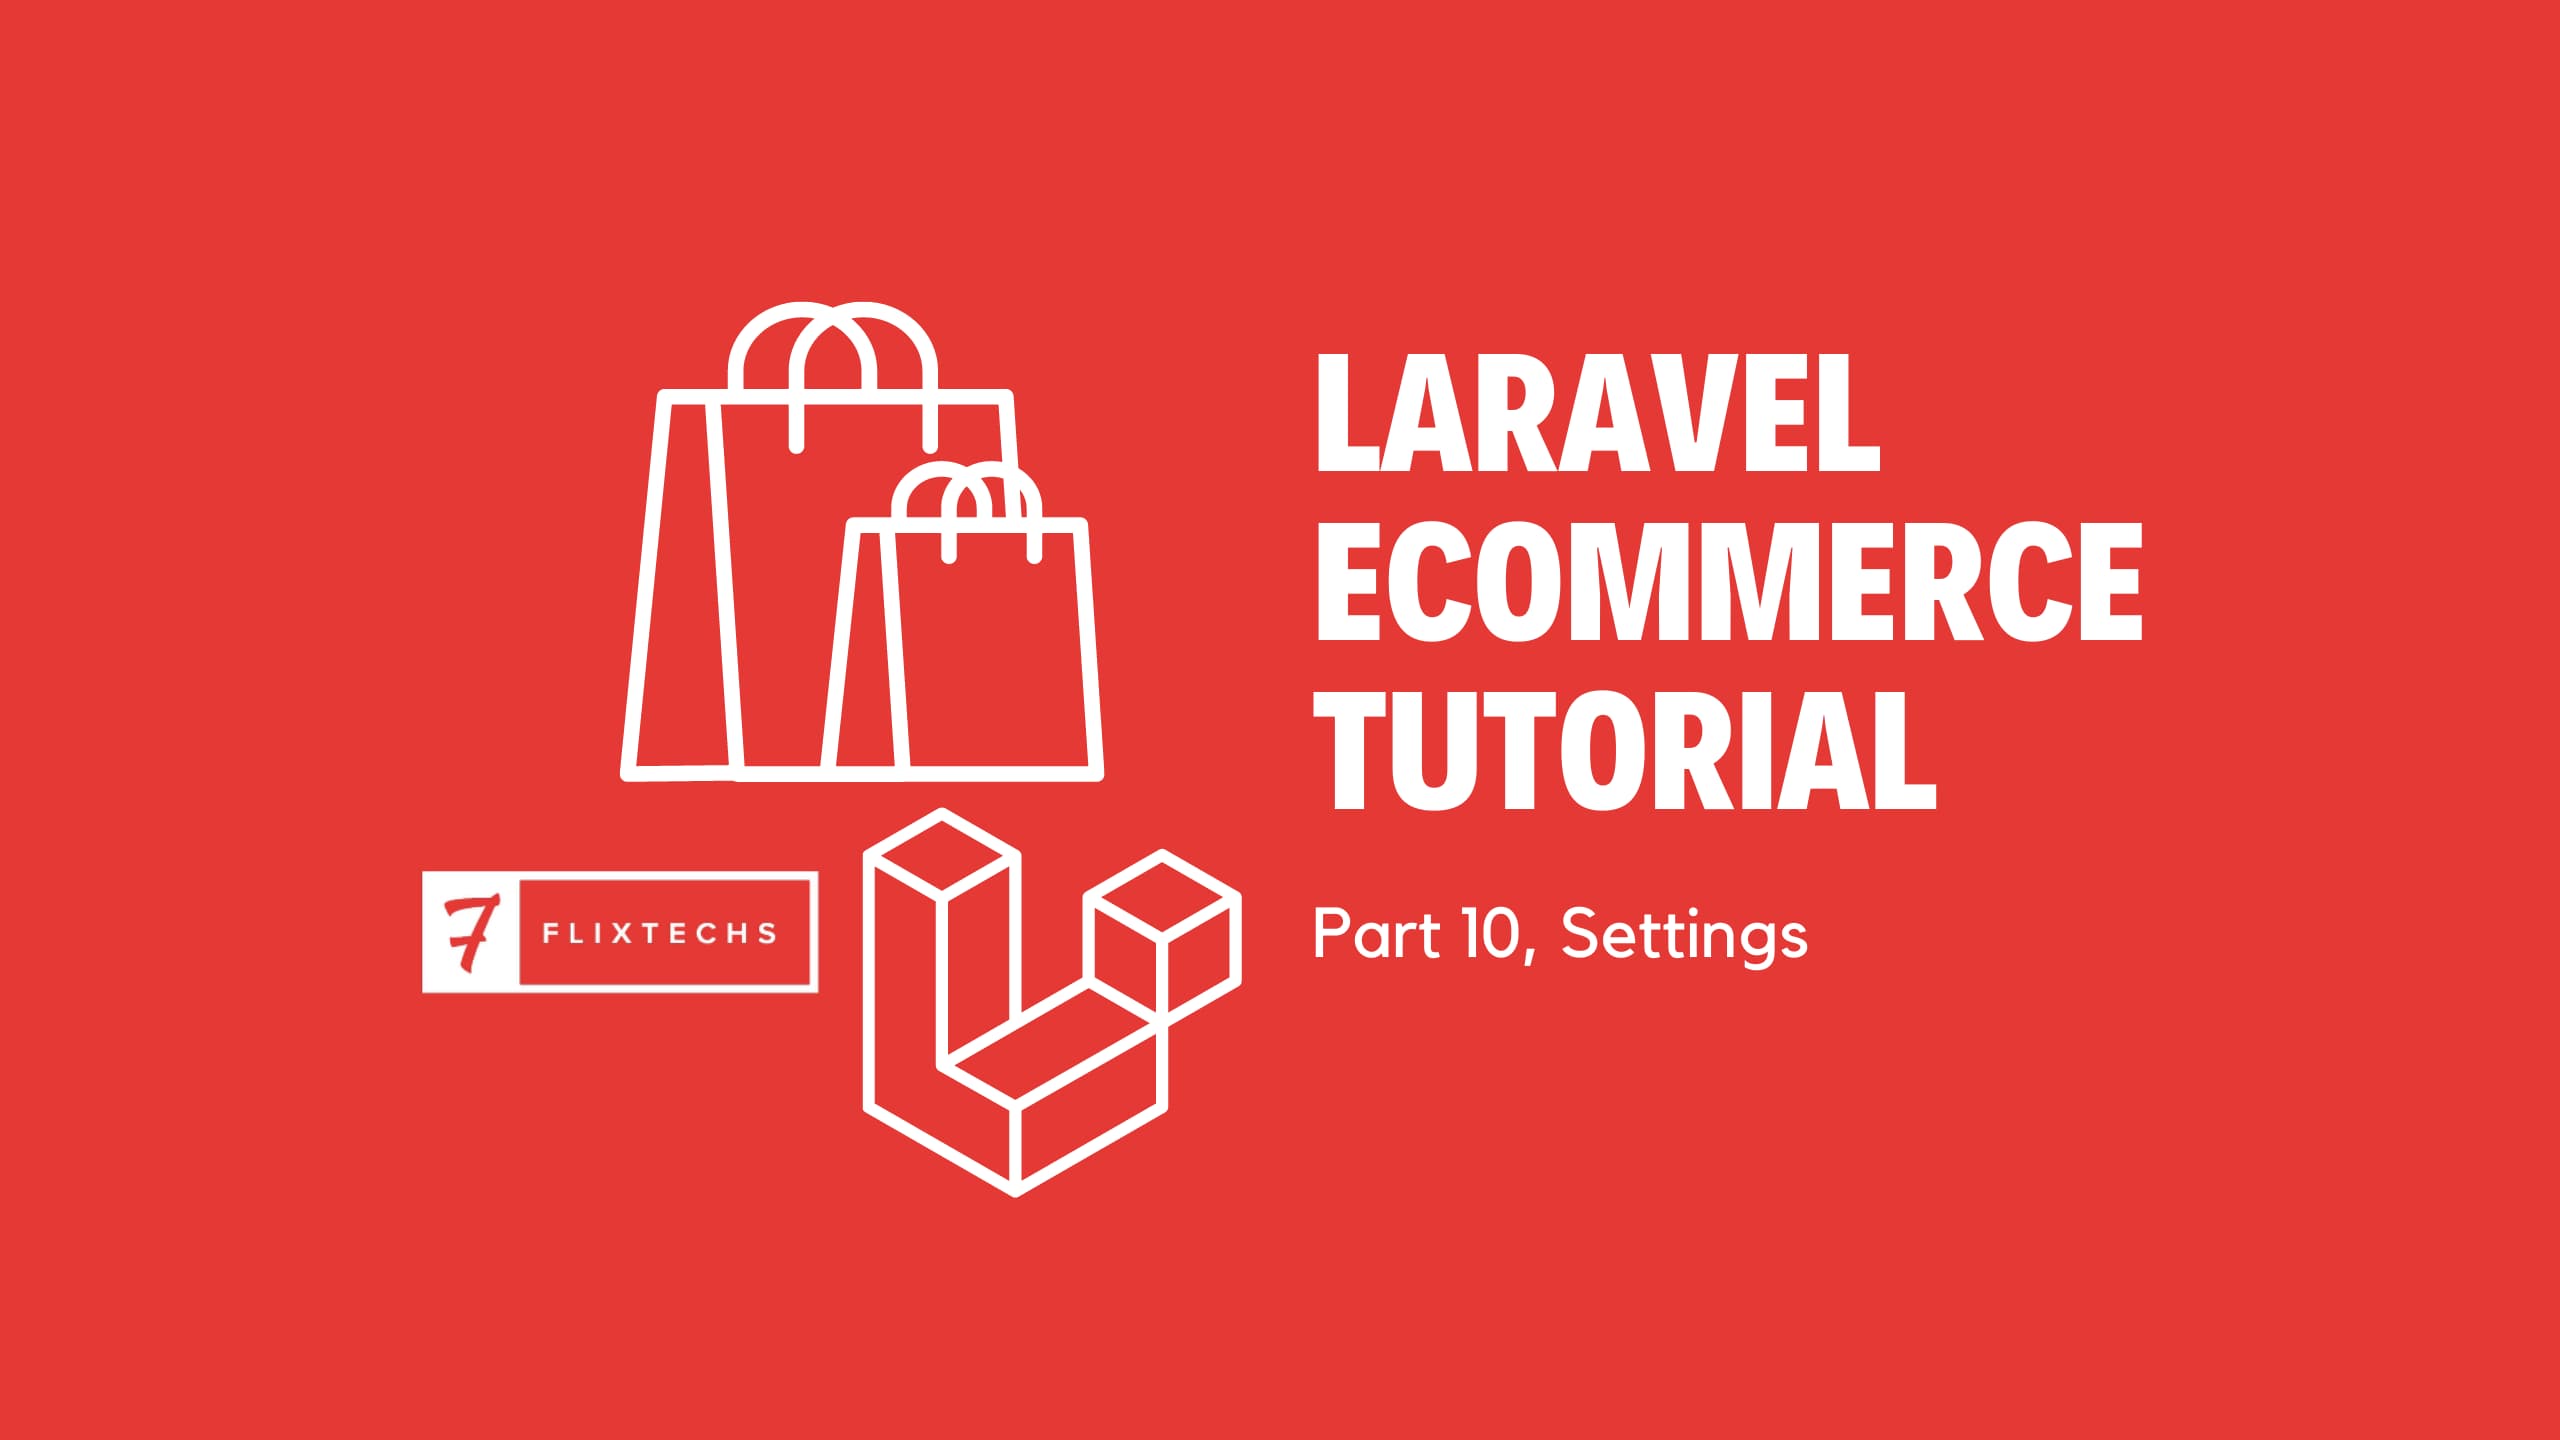 Laravel Ecommerce Tutorial: Part 10, Settings